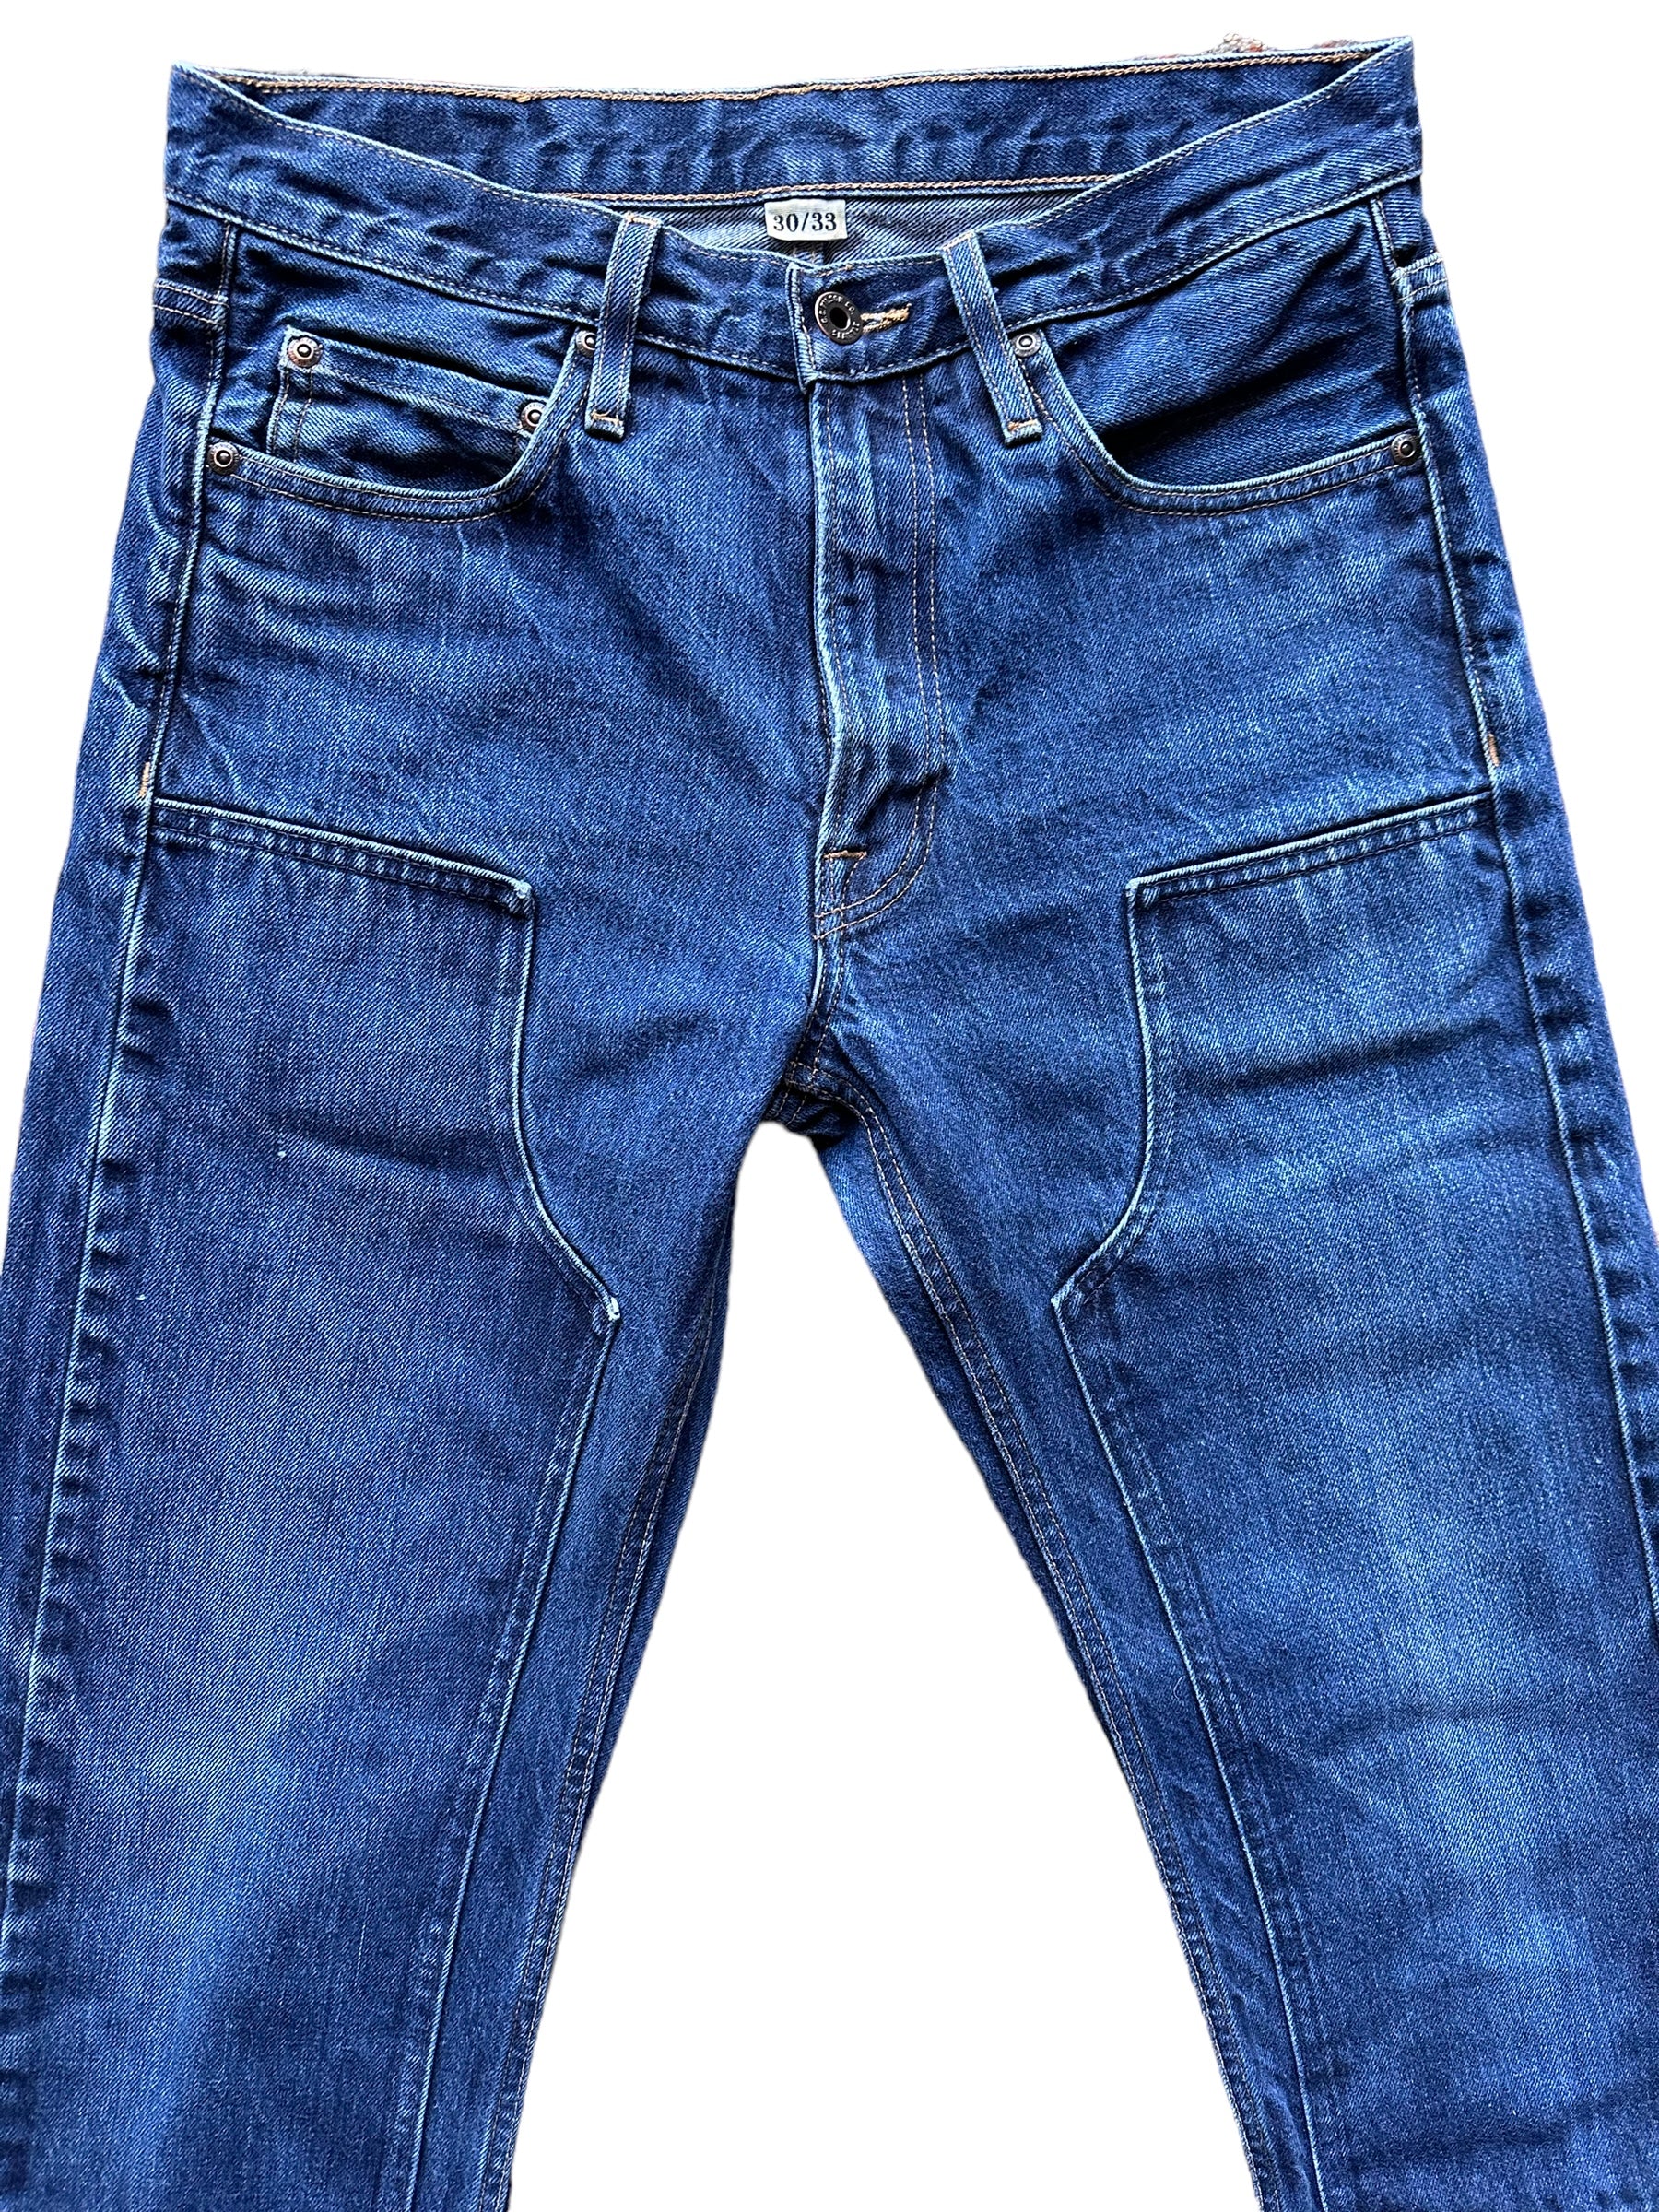 Upper Front View of Filson Denim Doublefront Jeans W30 |  Filson Double Knees | Filson Denim Workwear Seattle